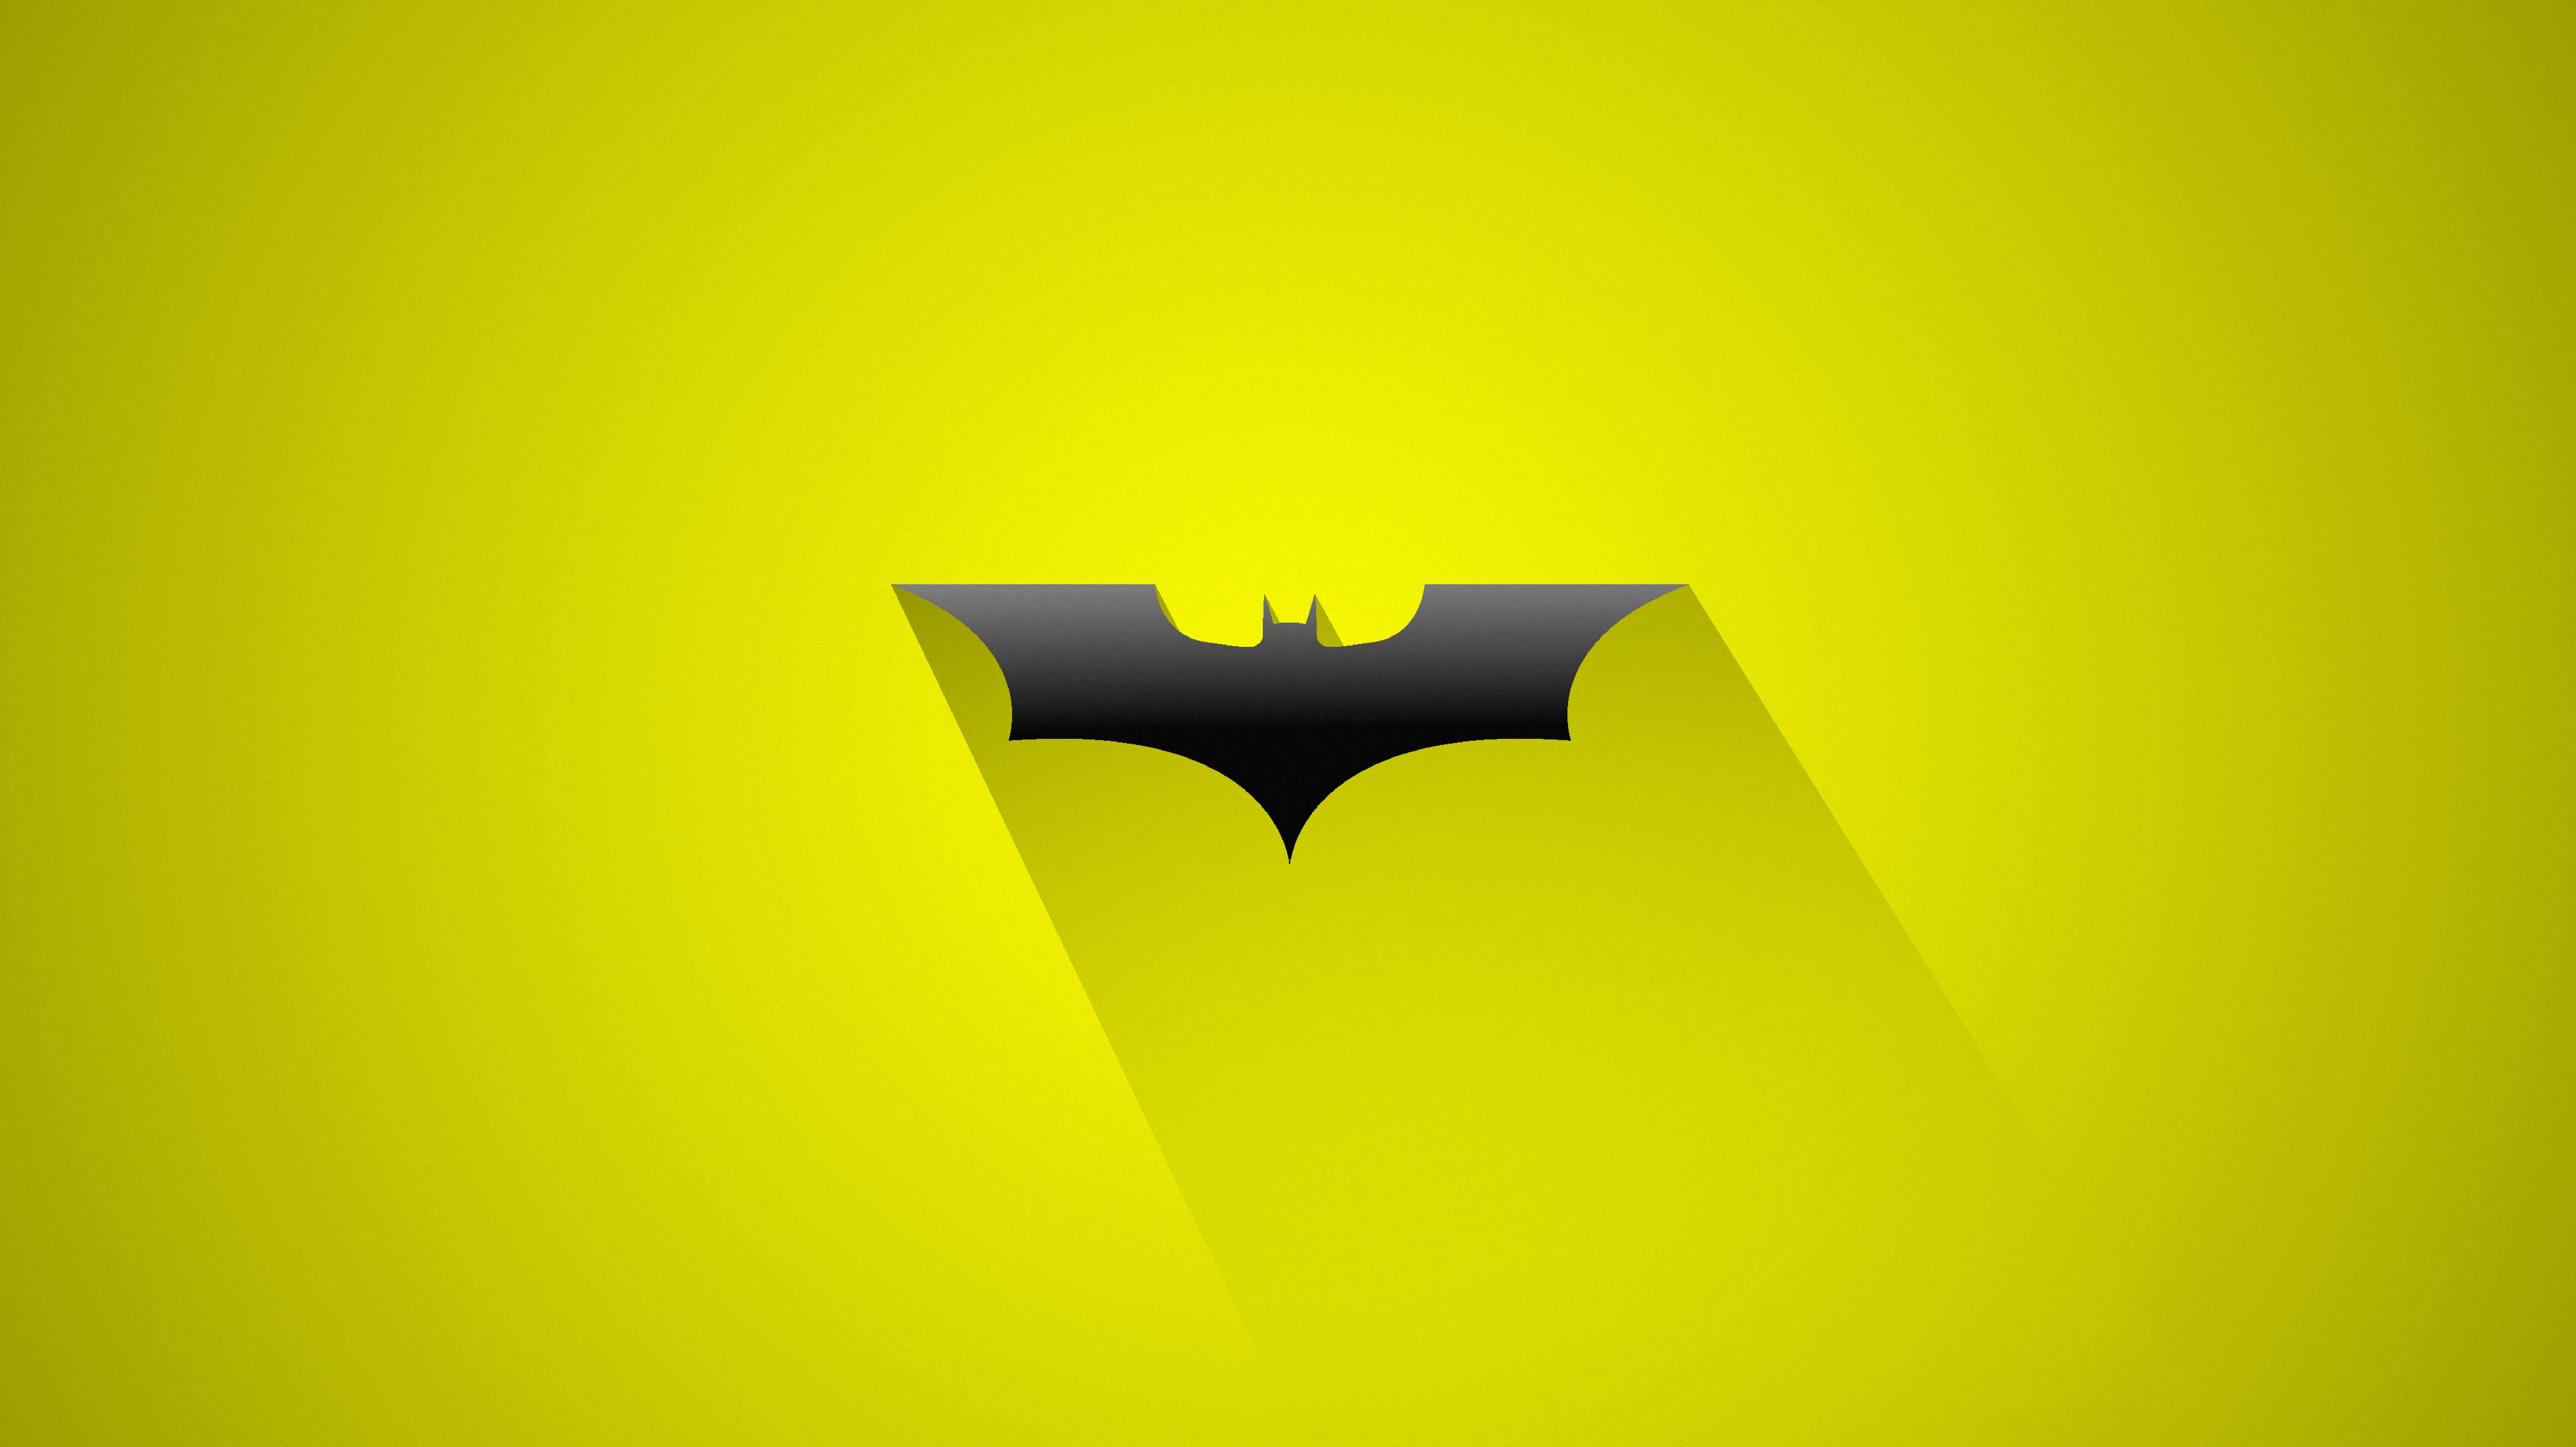 Скачать картинку Комиксы, Бэтмен, Логотип Бэтмена в телефон бесплатно.